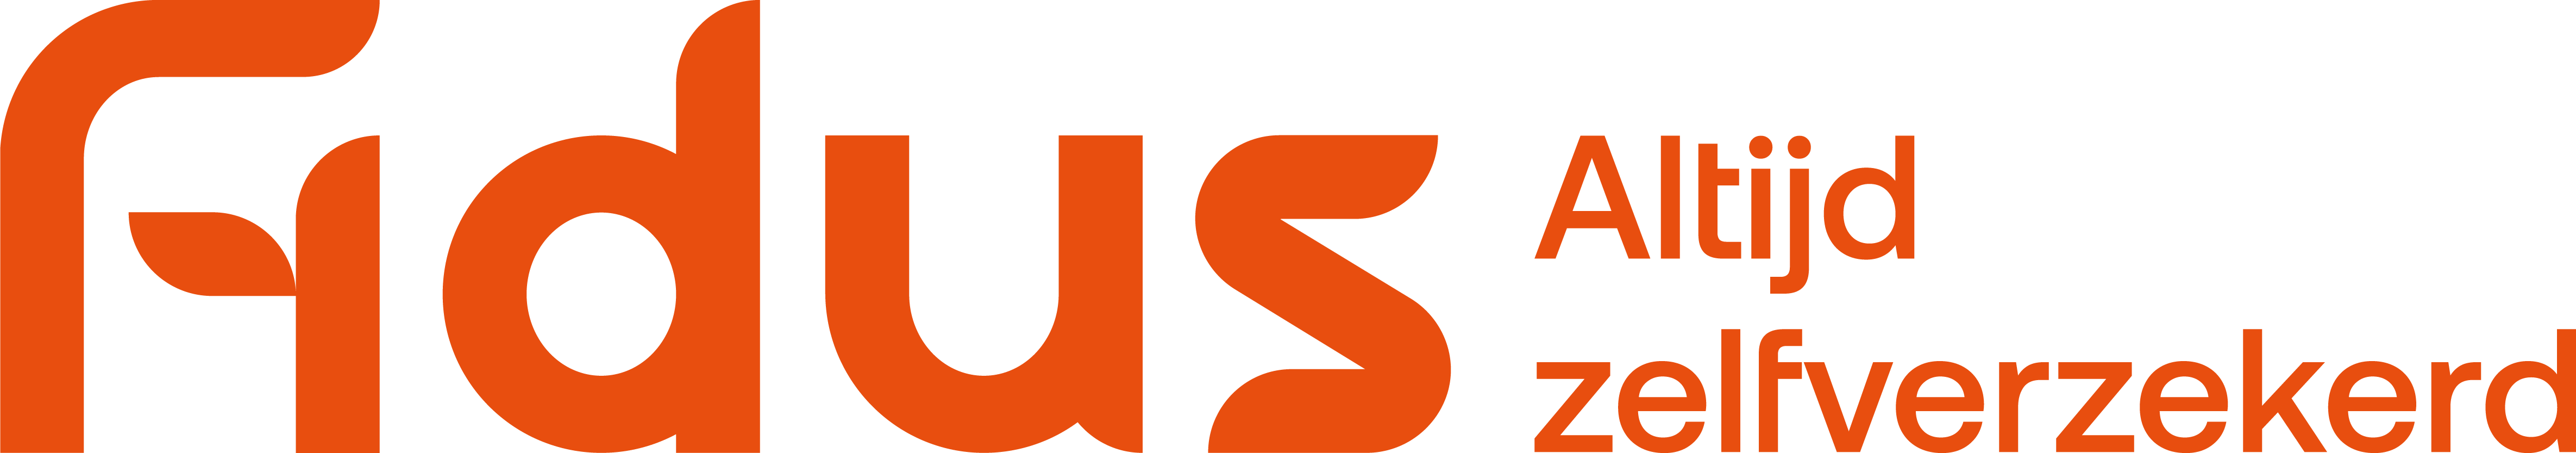 Fidus-logo-payoff-CMYK-oranje